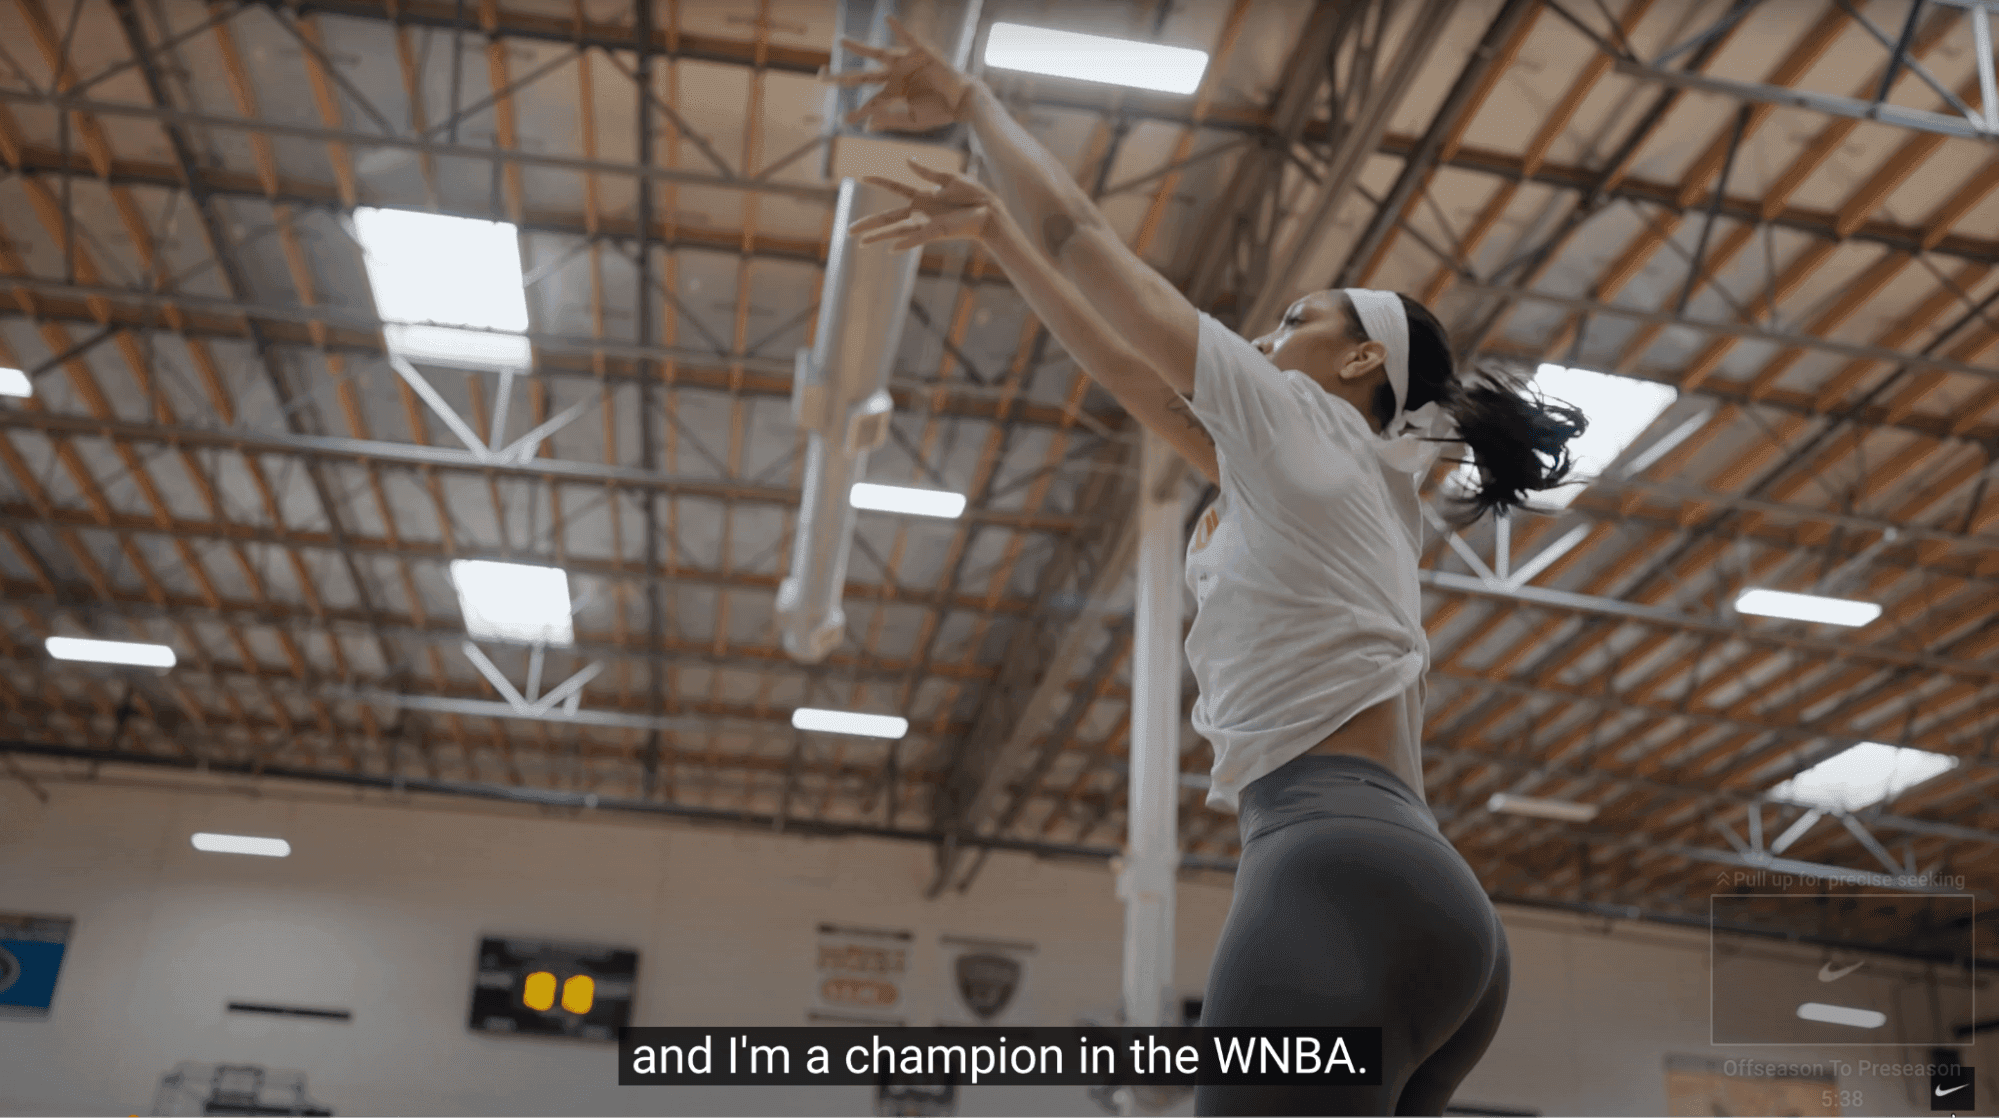 WNBA player A'ja Wilson shooting a basketball in Nike ad